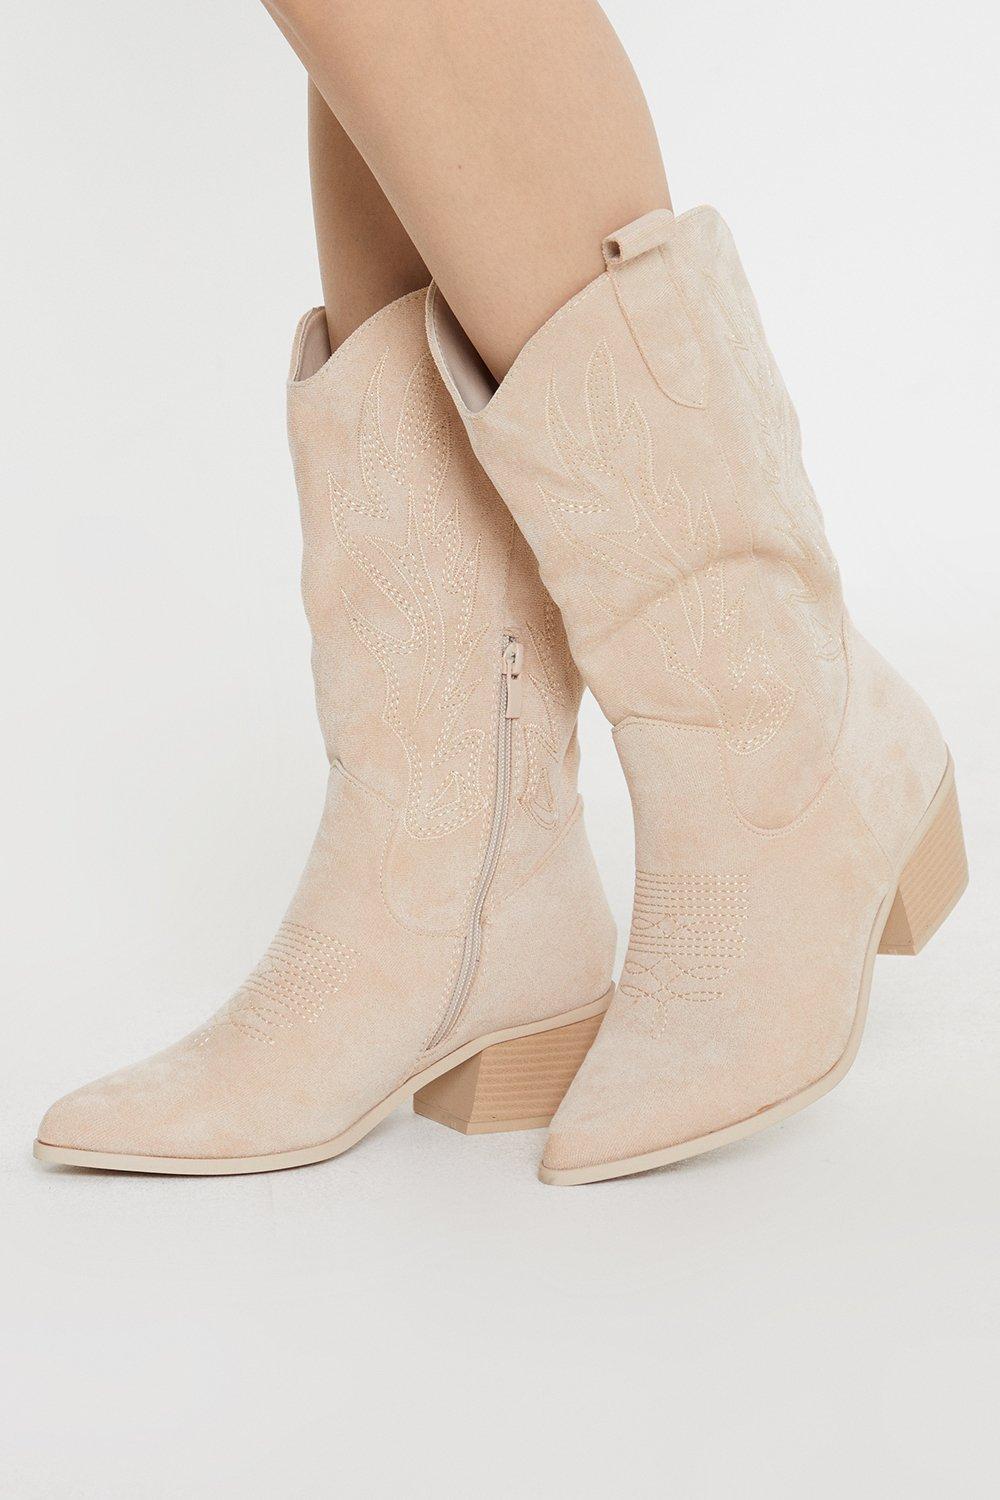 Women's Kenny Low Heel Stitched Western Knee Boots - beige - 5